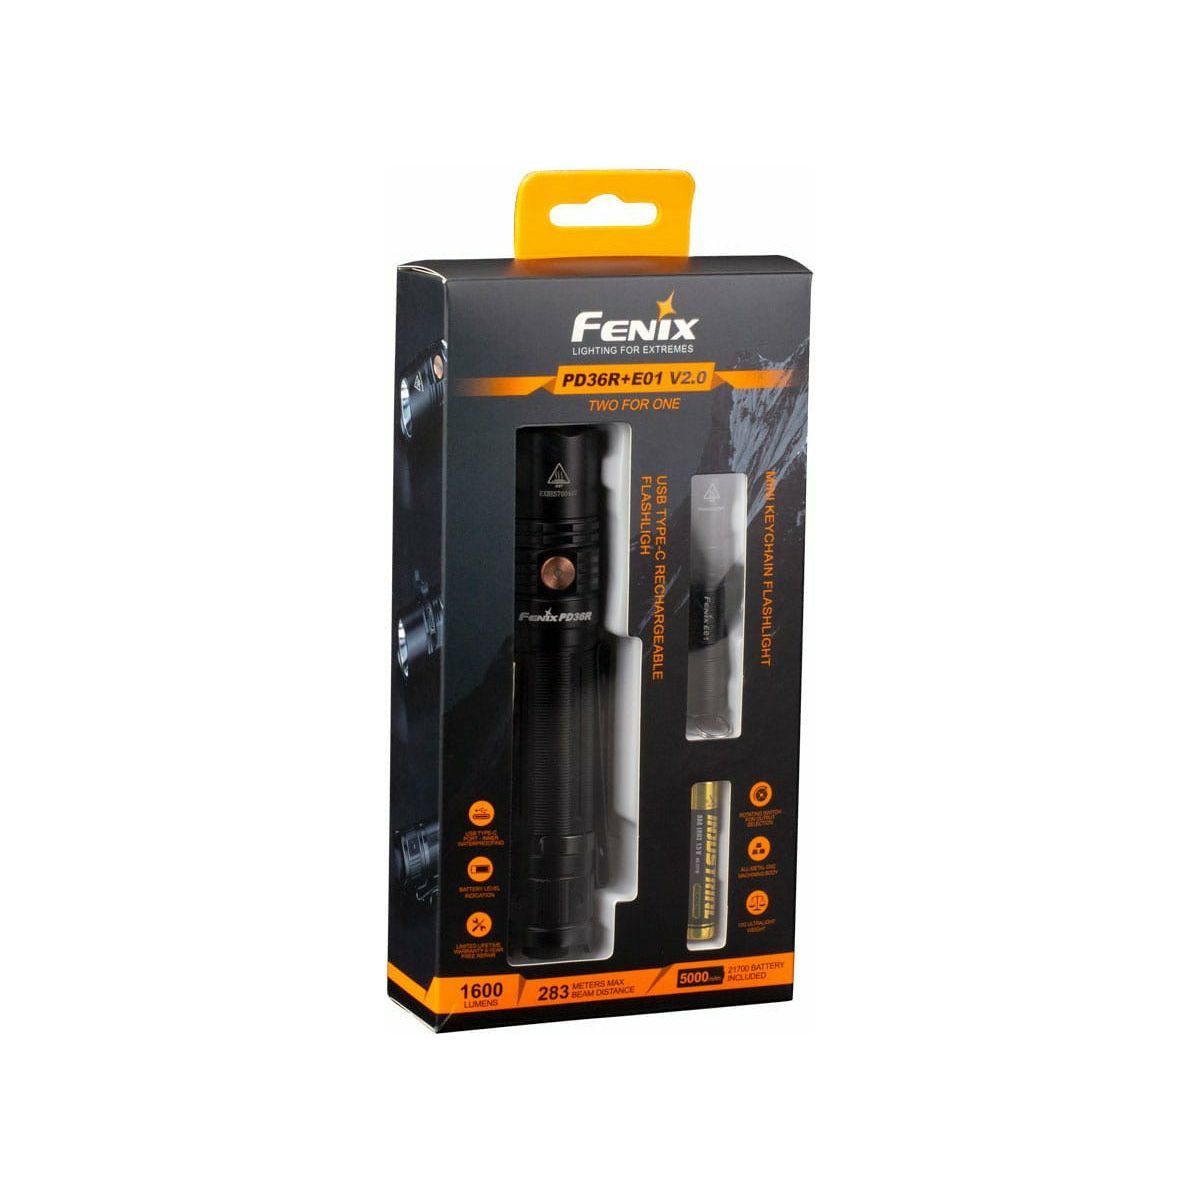 Fenix PD36R 1600 Lumen Rechargeable Torch